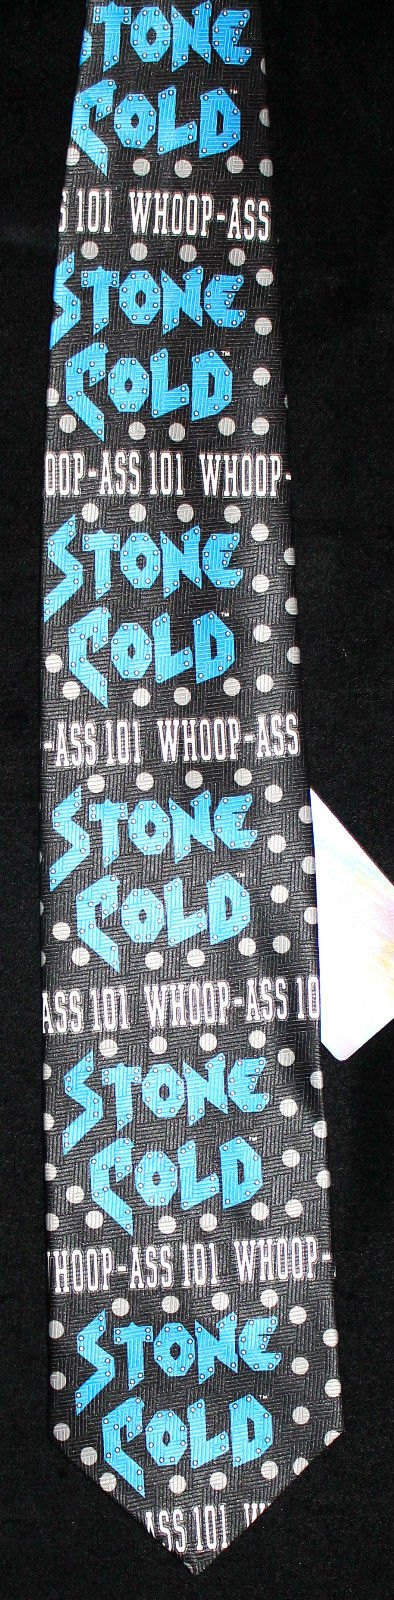 Stone Cold Steve Austin necktie 1